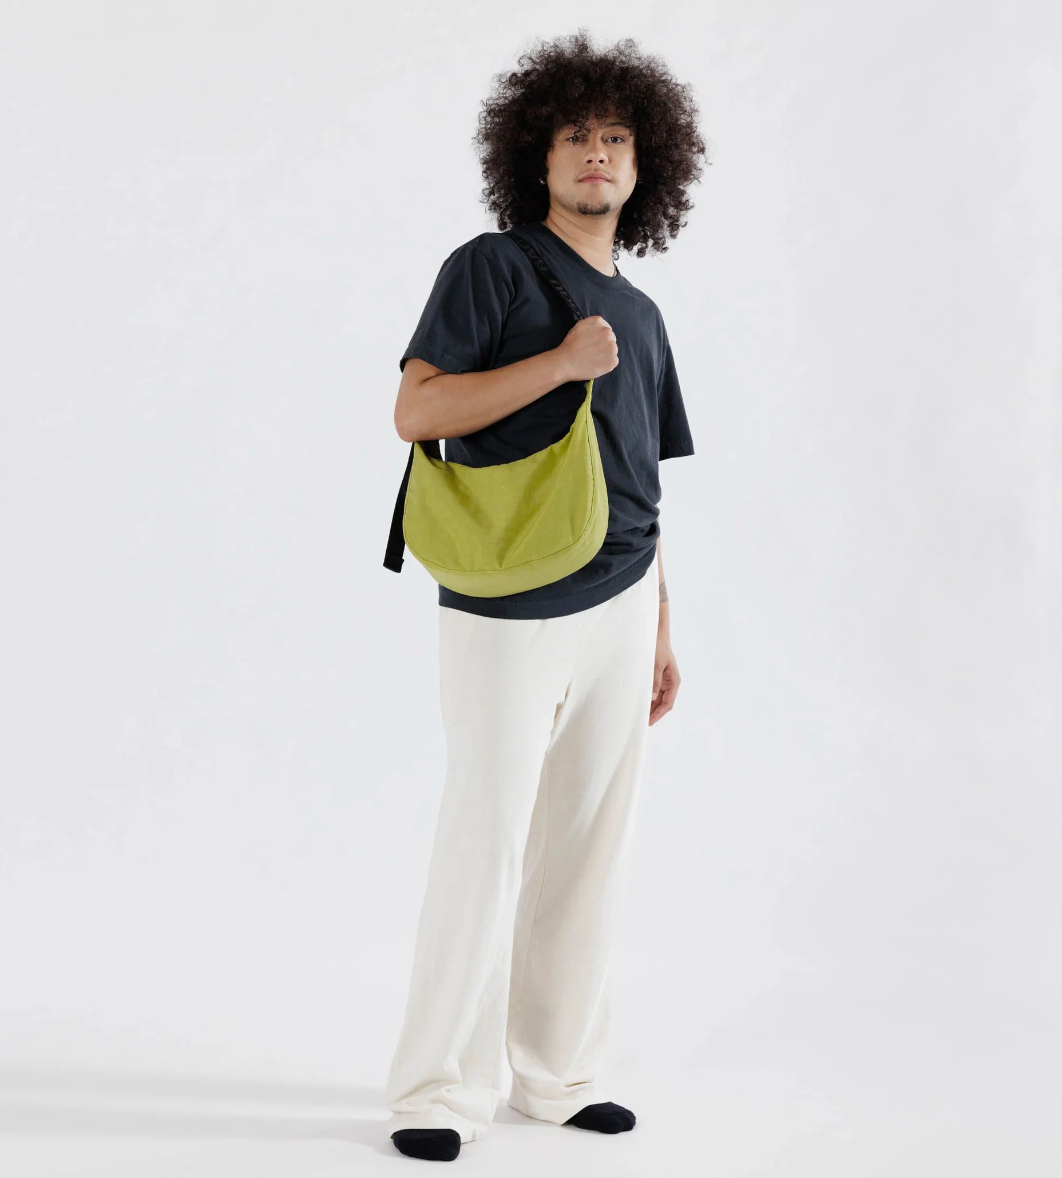 Medium Nylon Crescent Bag - Lemongrass